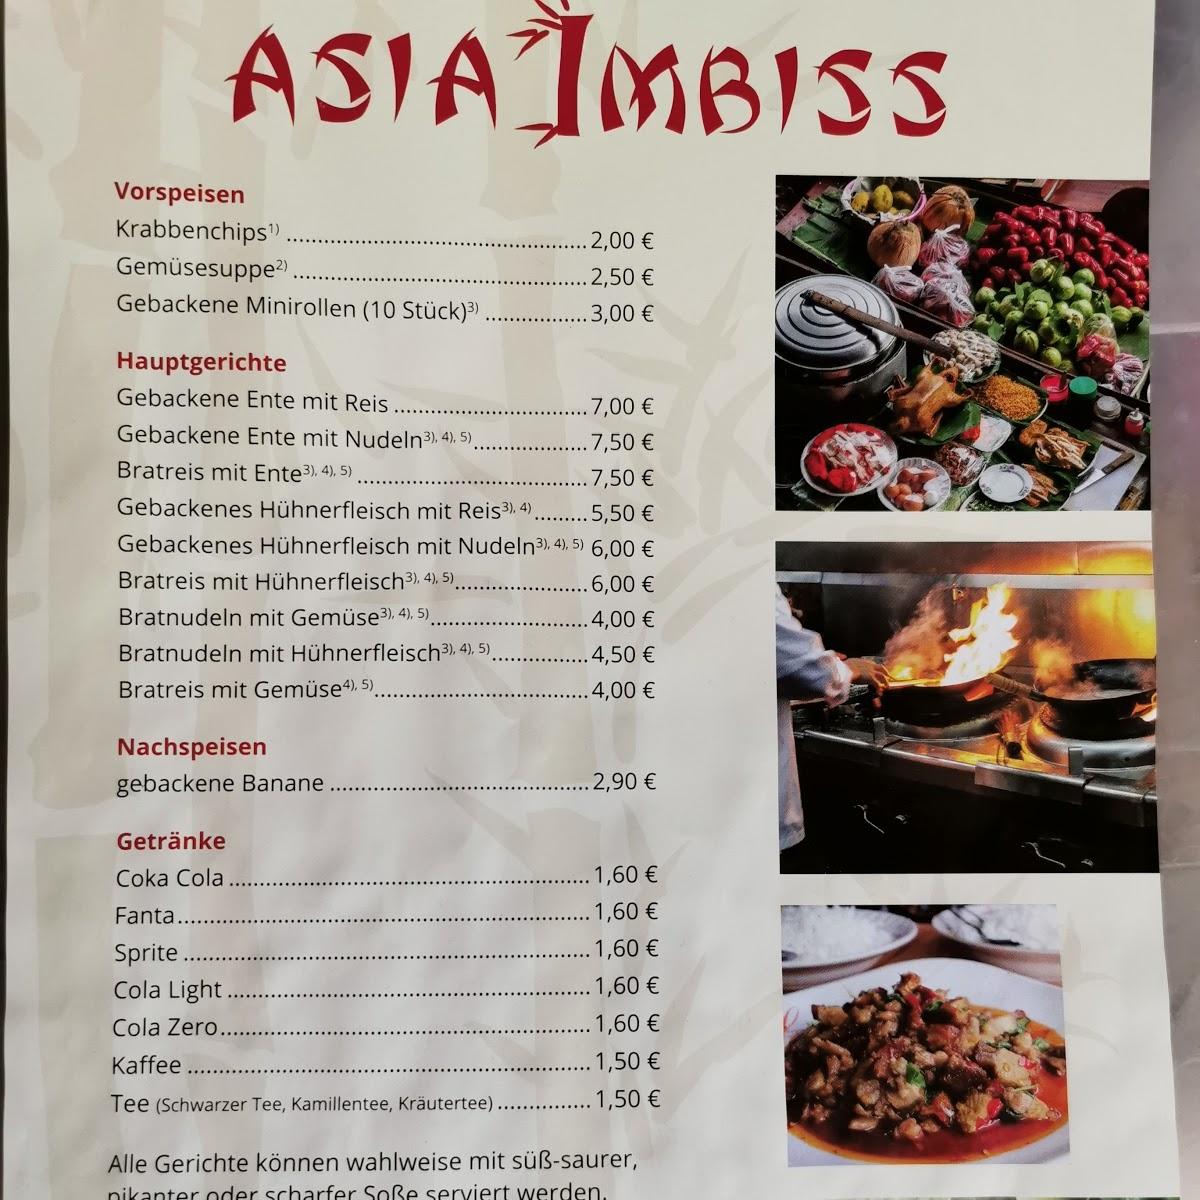 Restaurant "Asia Imbiss" in Wedemark